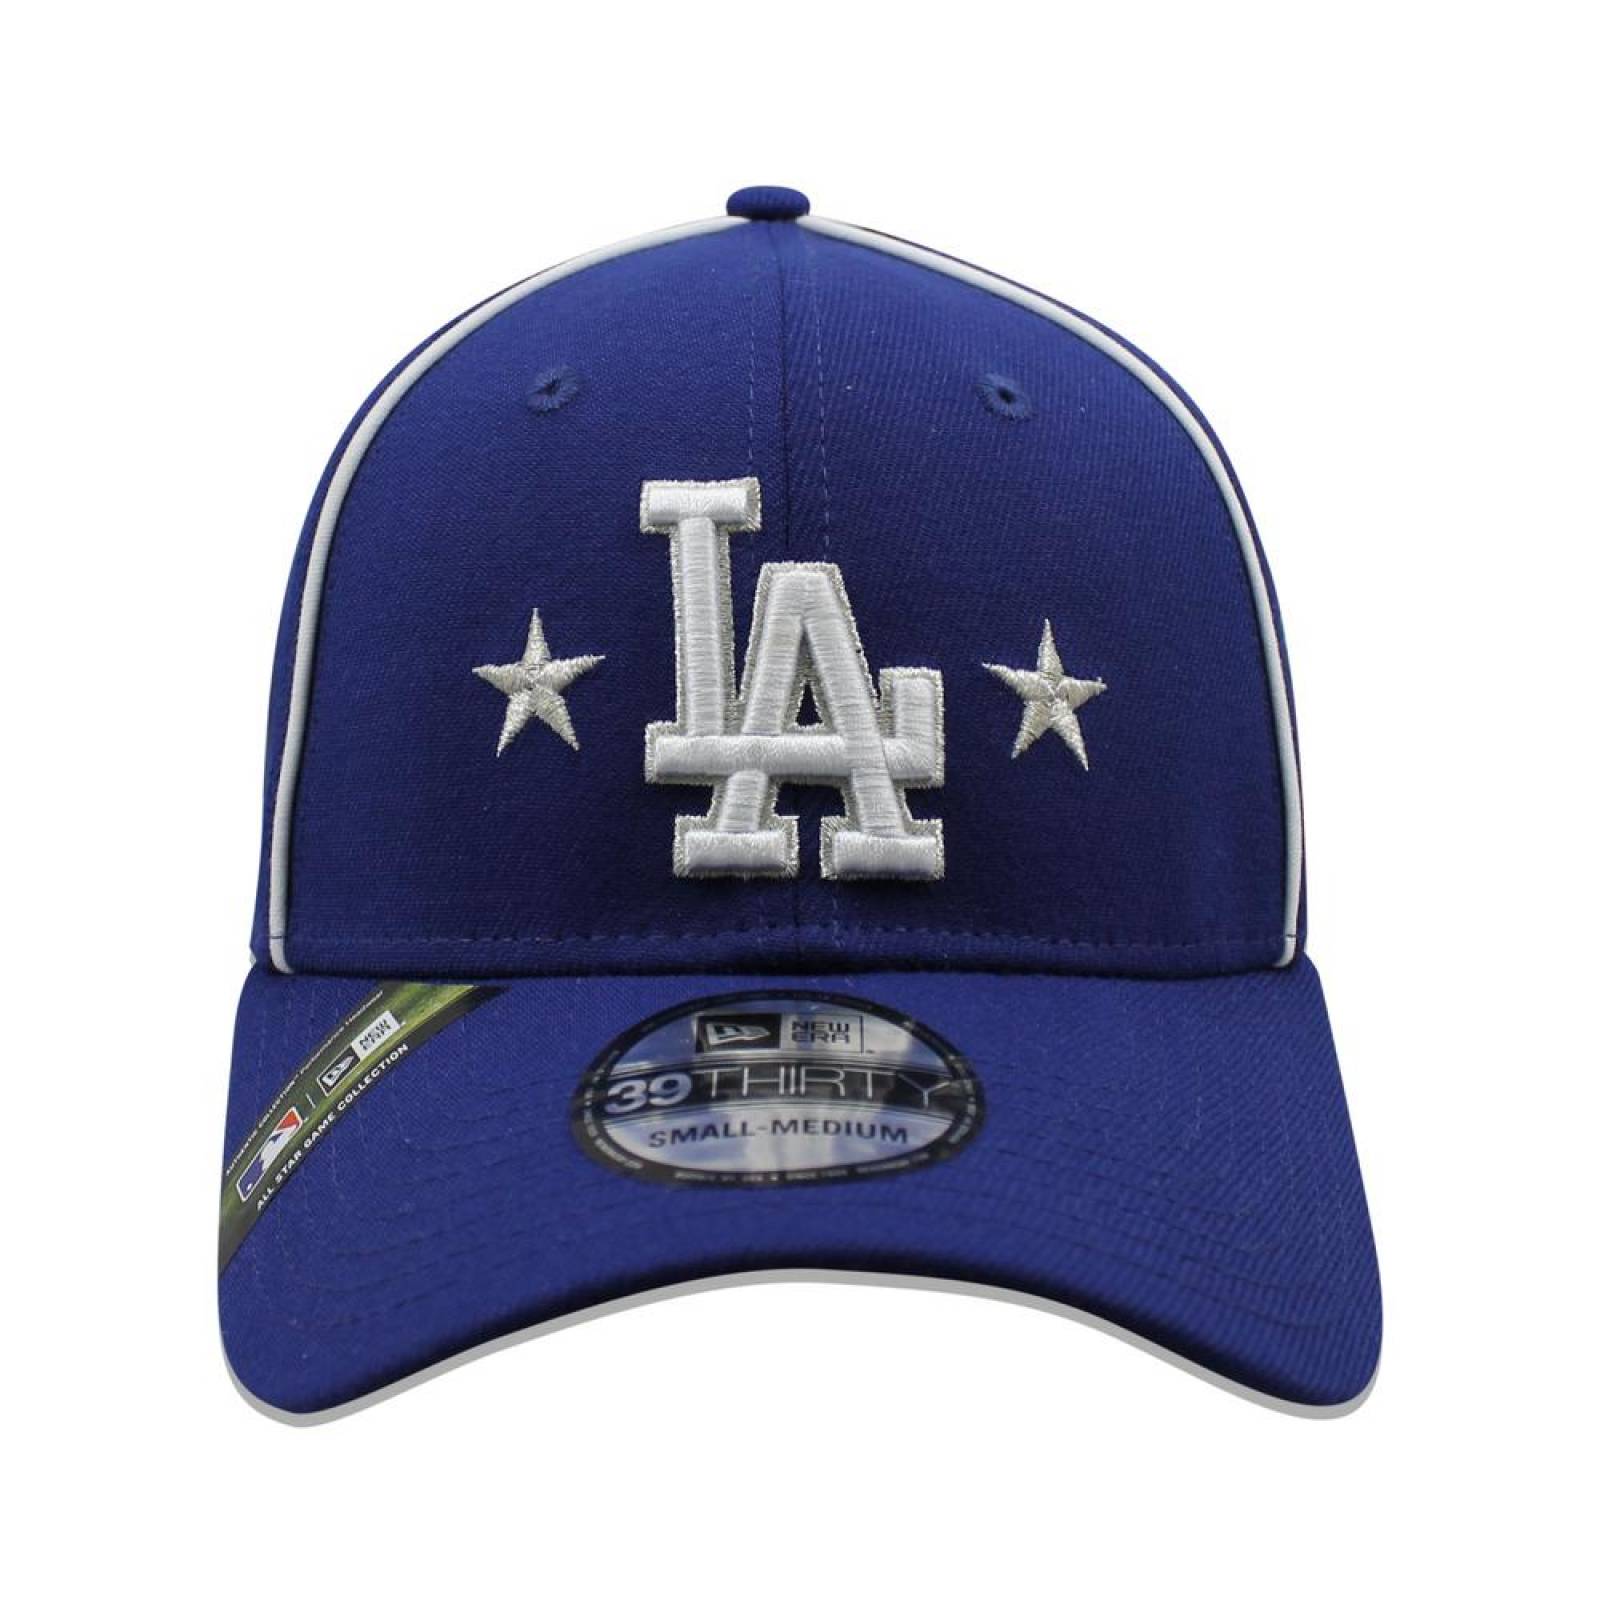 Gorra New Era 39 Thirty MLB Dodgers All Star Game 2019 Azul 